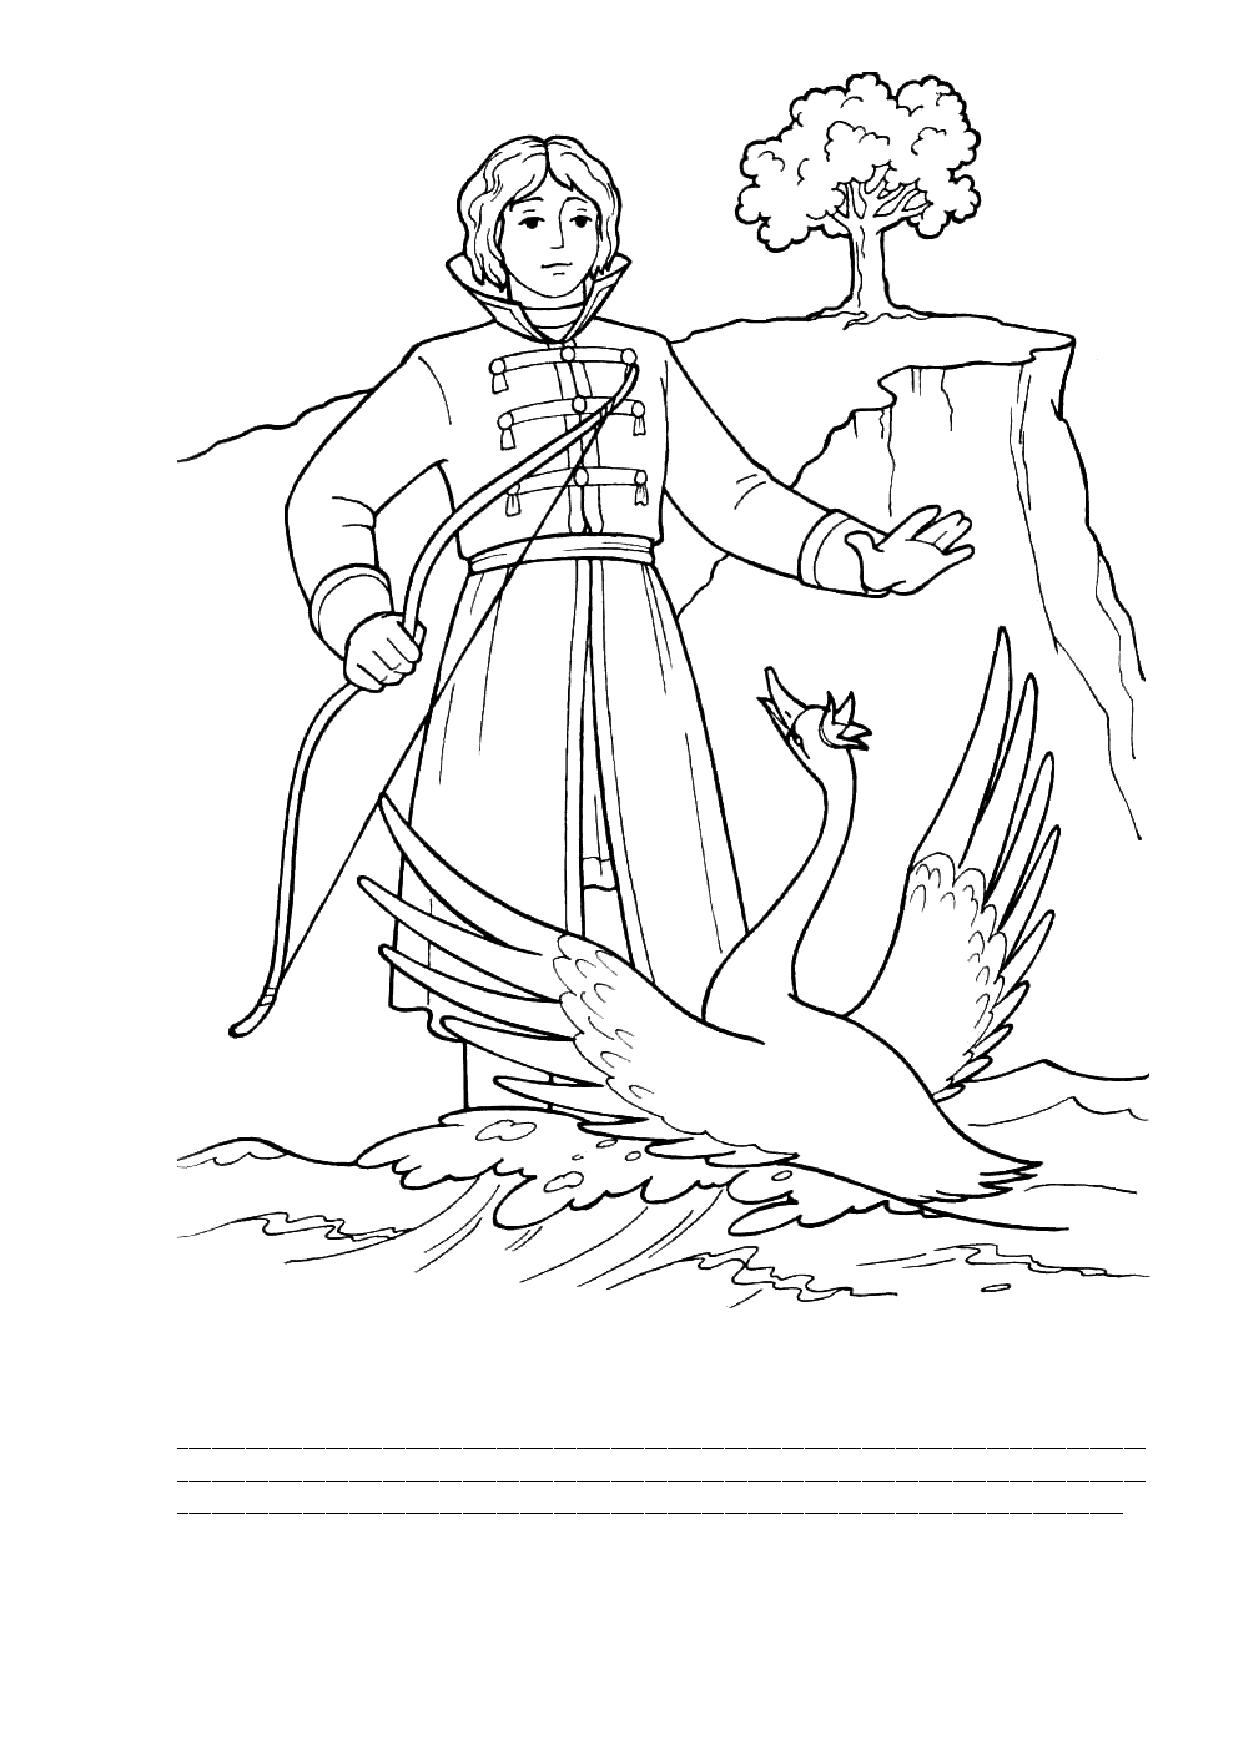 Рисунок на тему сказка о царе салтане царевна лебедь